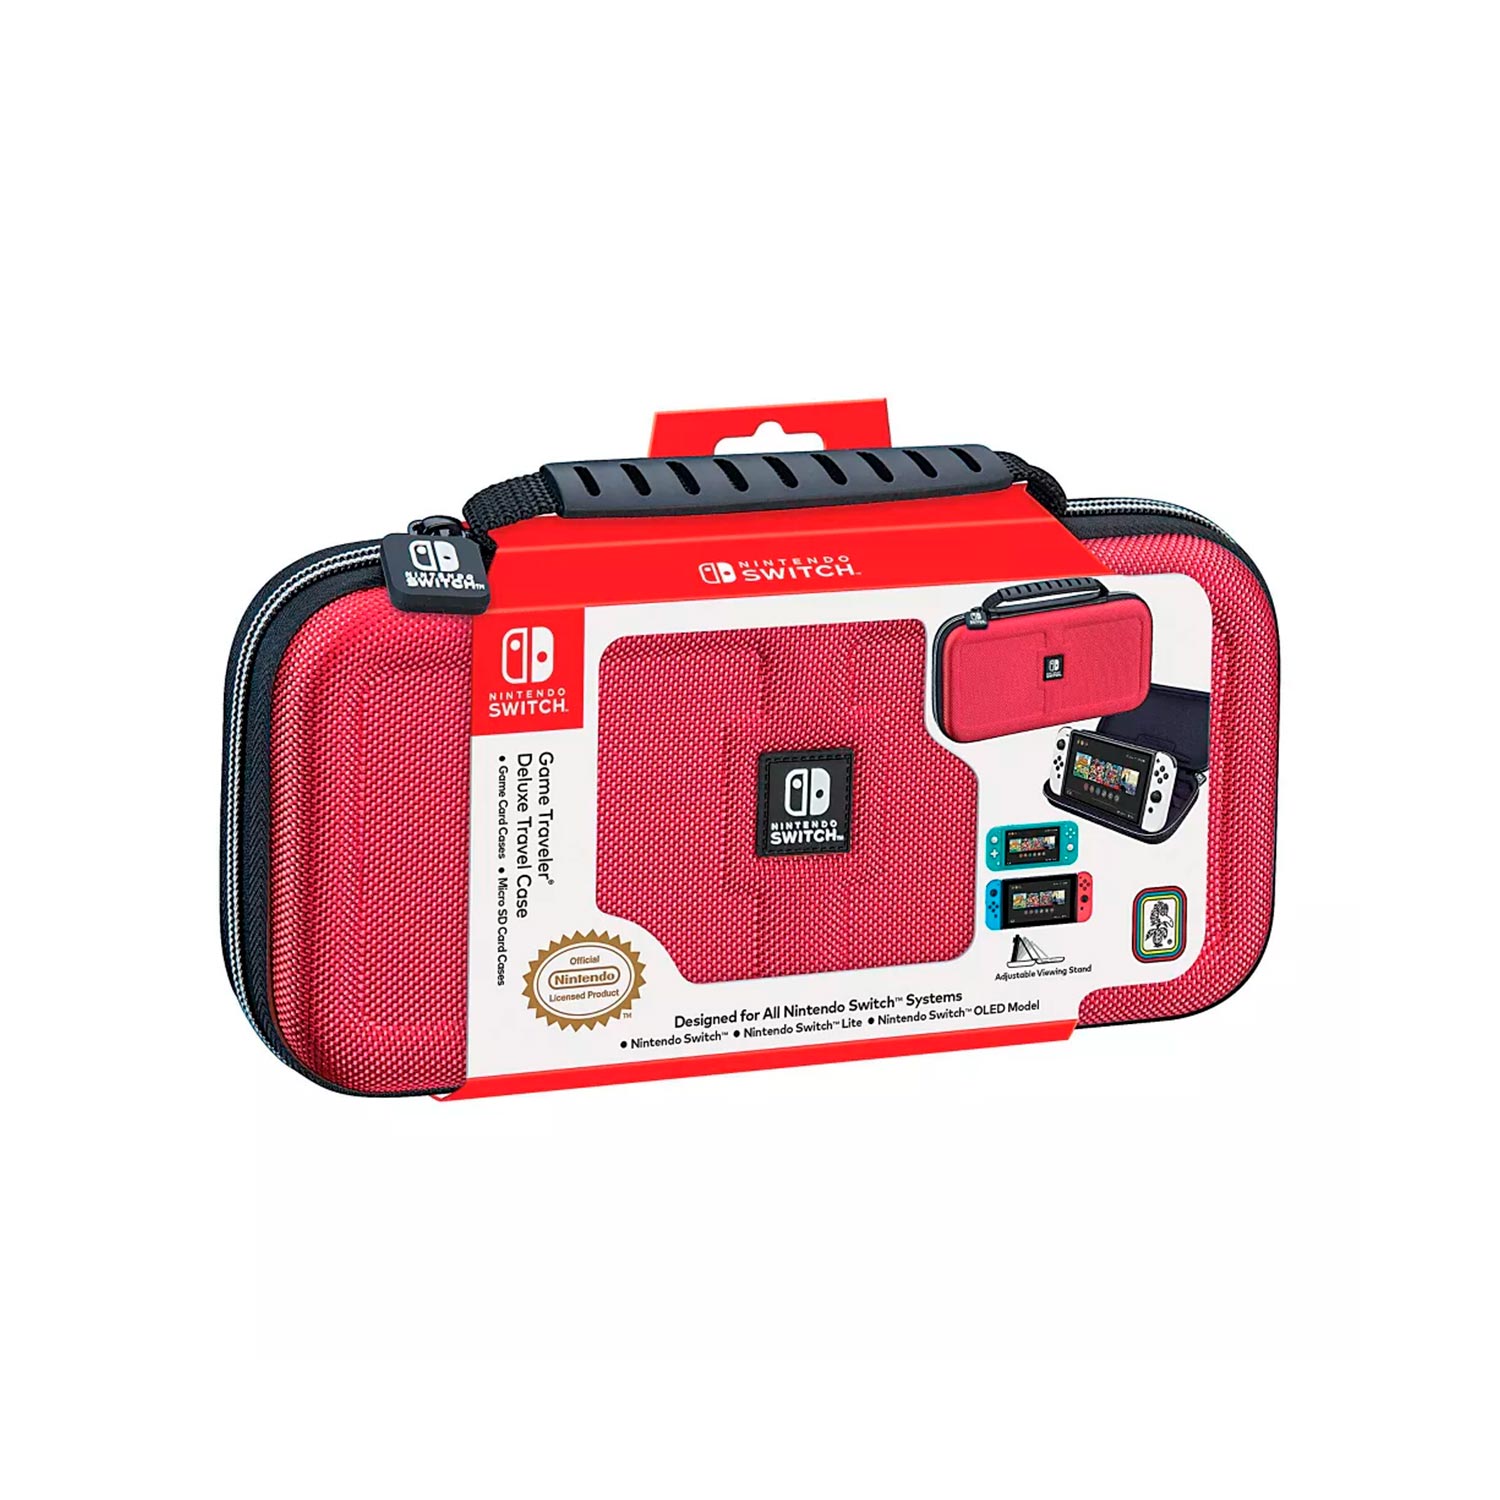 Estuche Game Traveler Deluxe Travel Case Red Black 1680D Nintendo Switch Oled